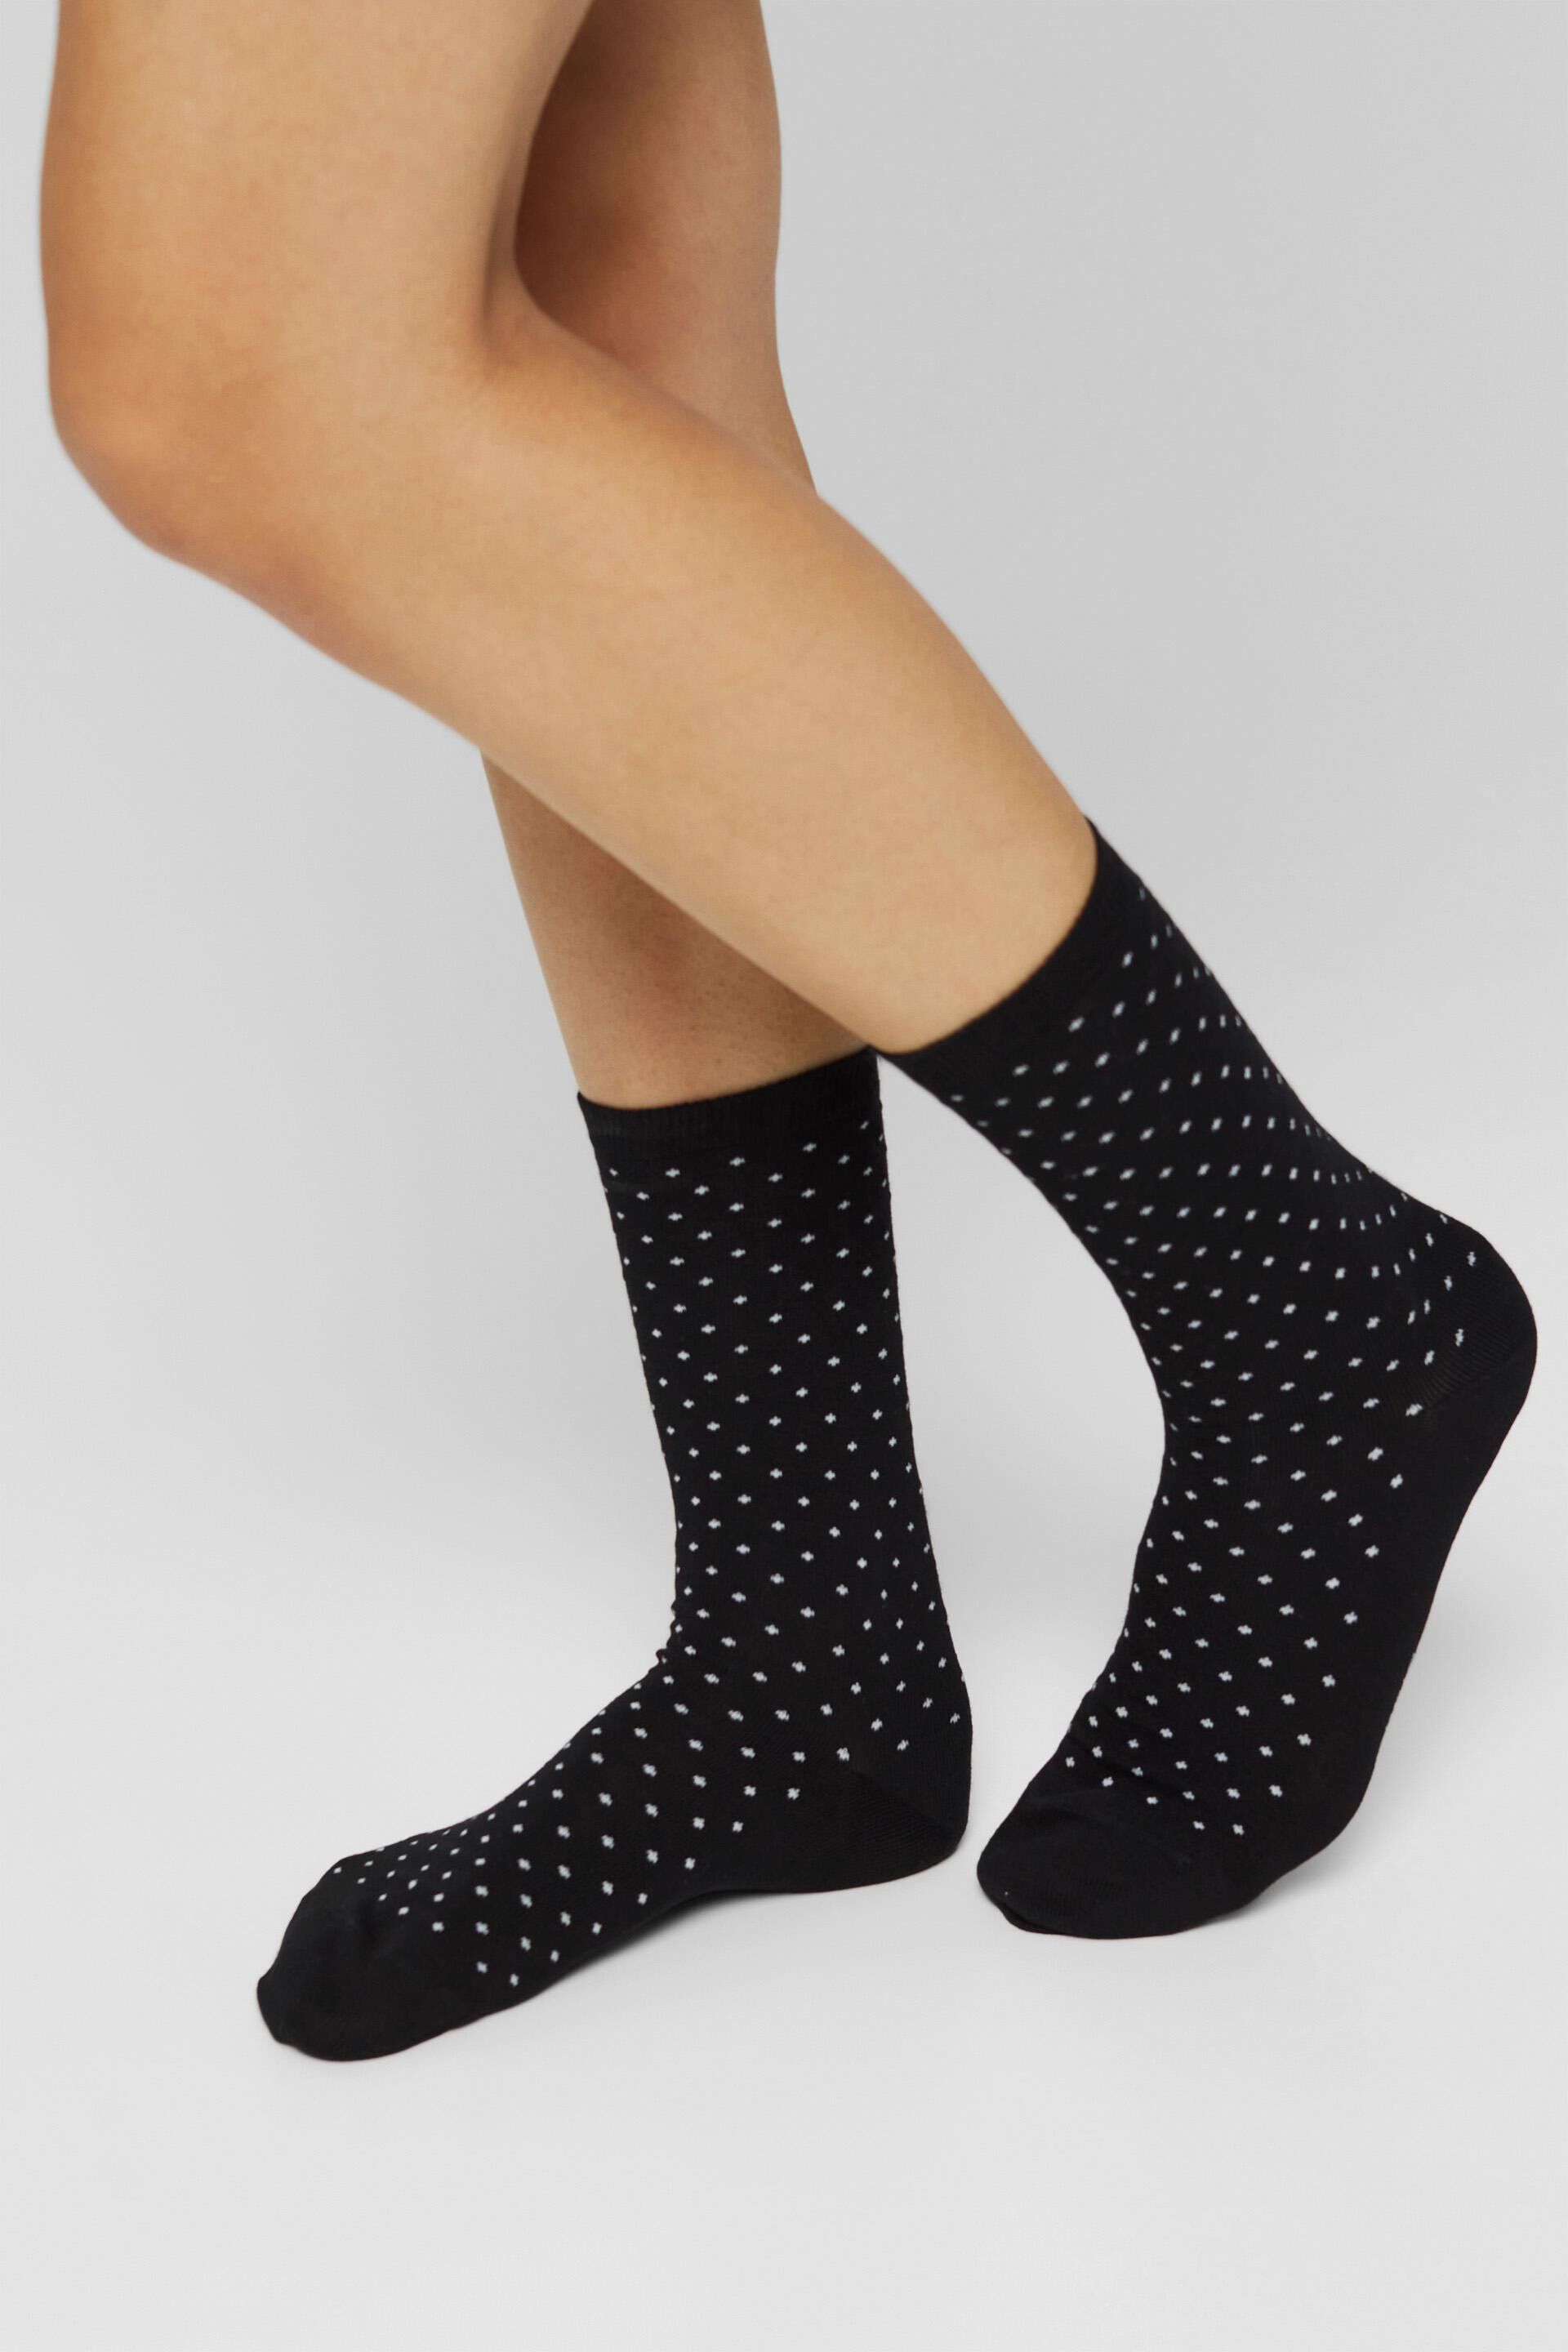 Men's Black Socks Verve 2 Ribbed Dress for Shoe Size 7-12 Lot of 9 Pairs 